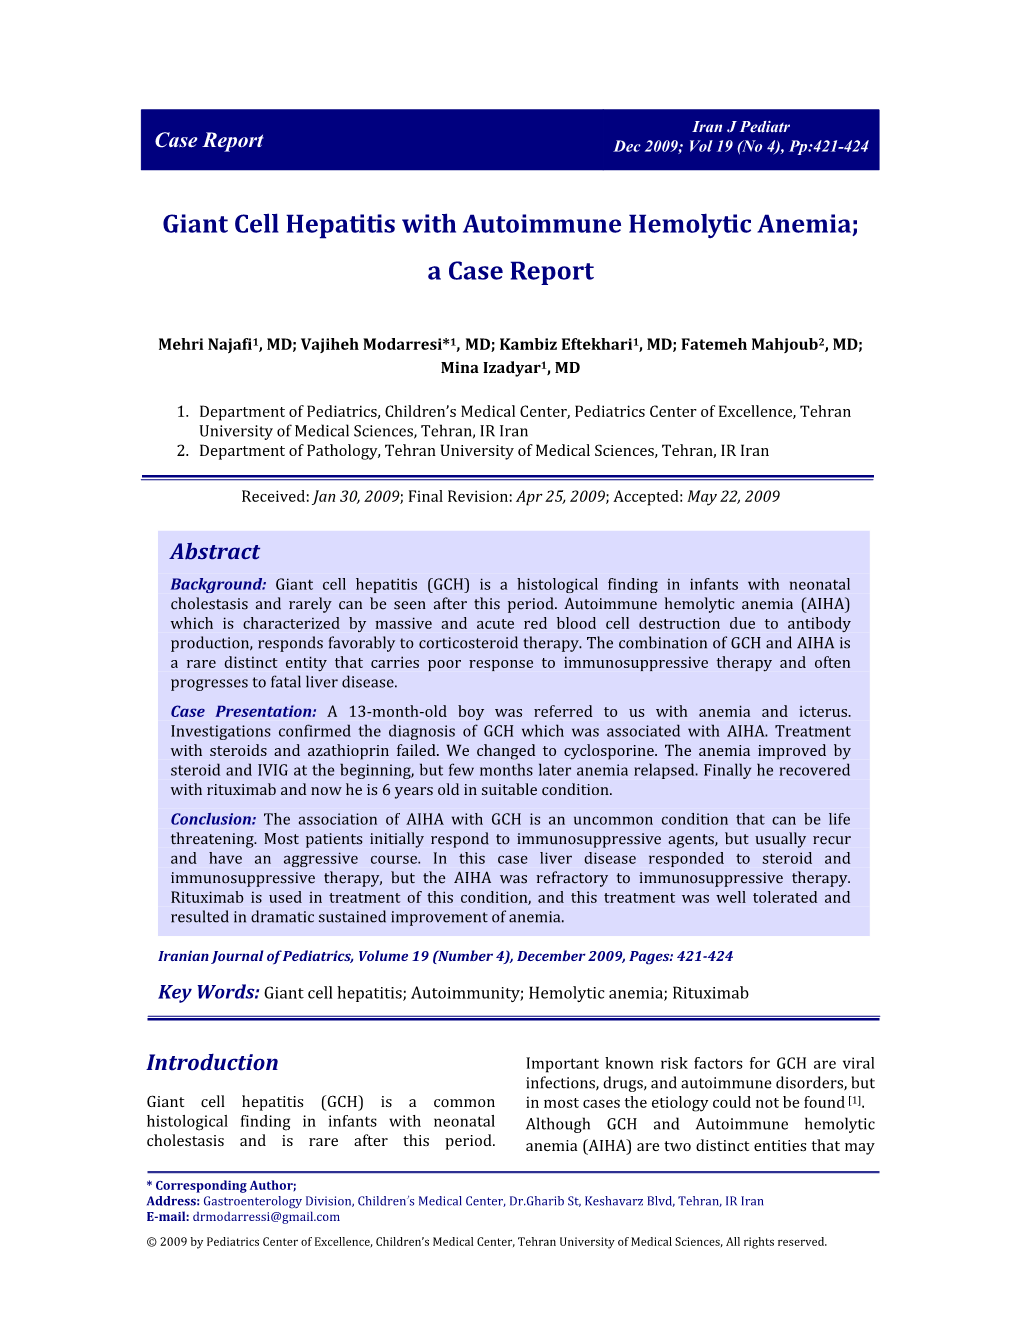 Giant Cell Hepatitis with Autoimmune Hemolytic Anemia; a Case Report